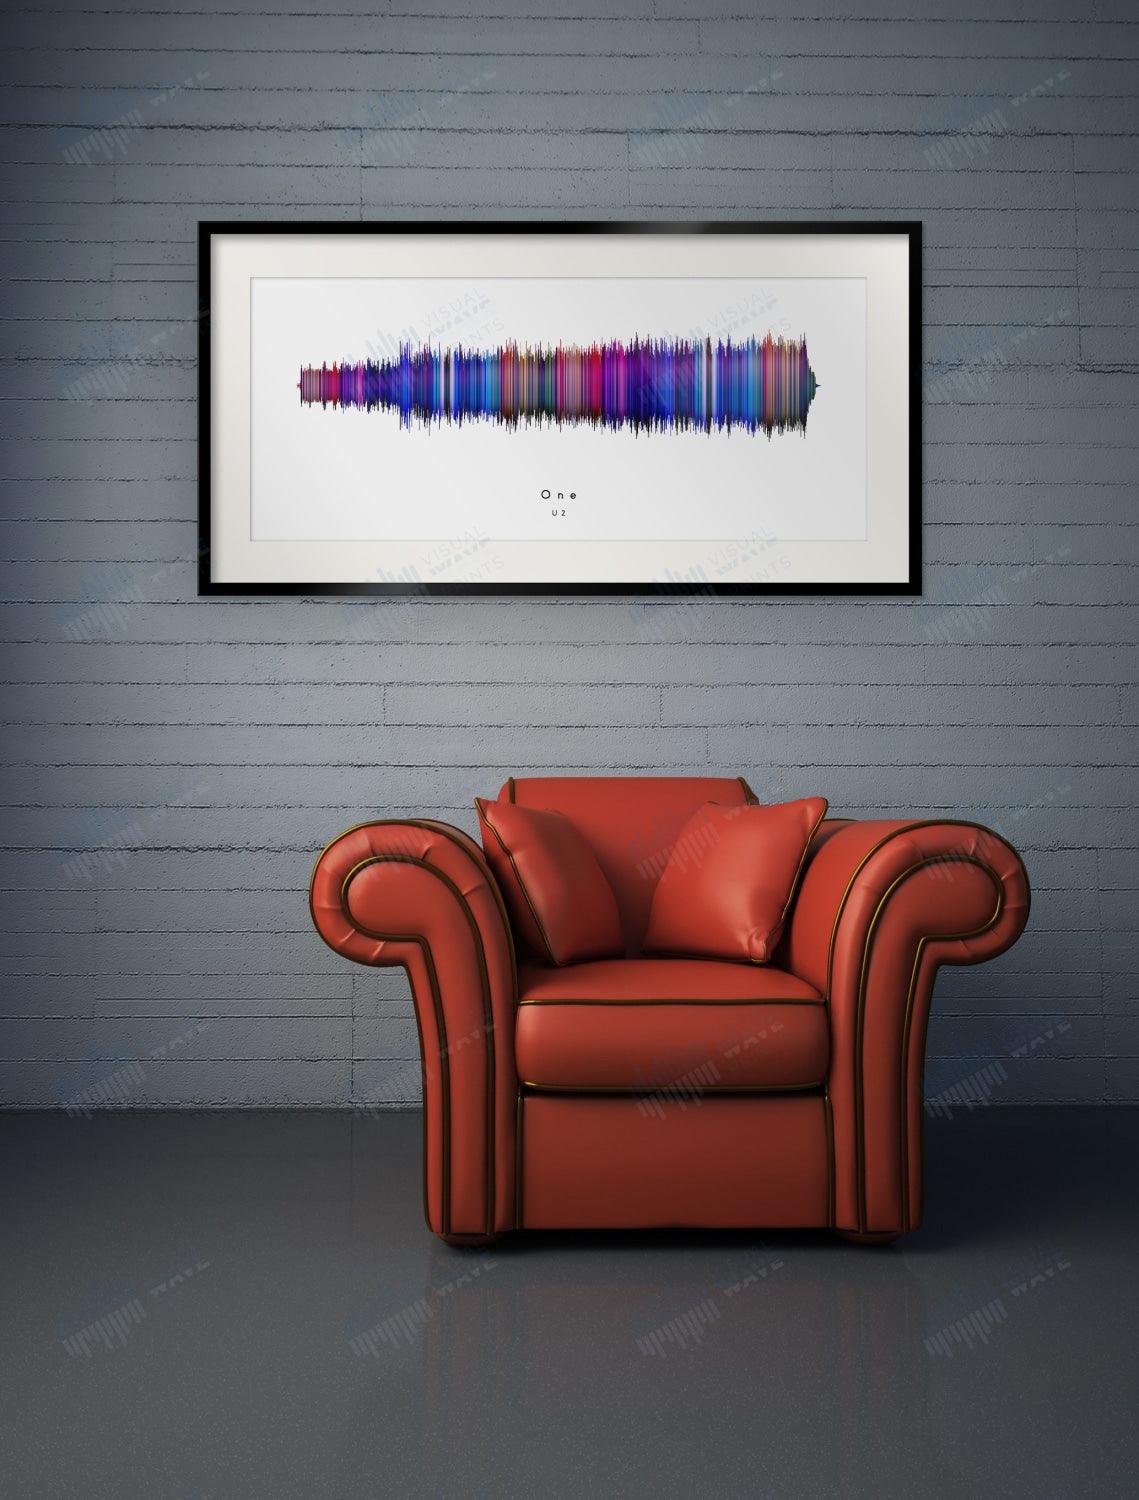 One by U2 - Visual Wave Prints